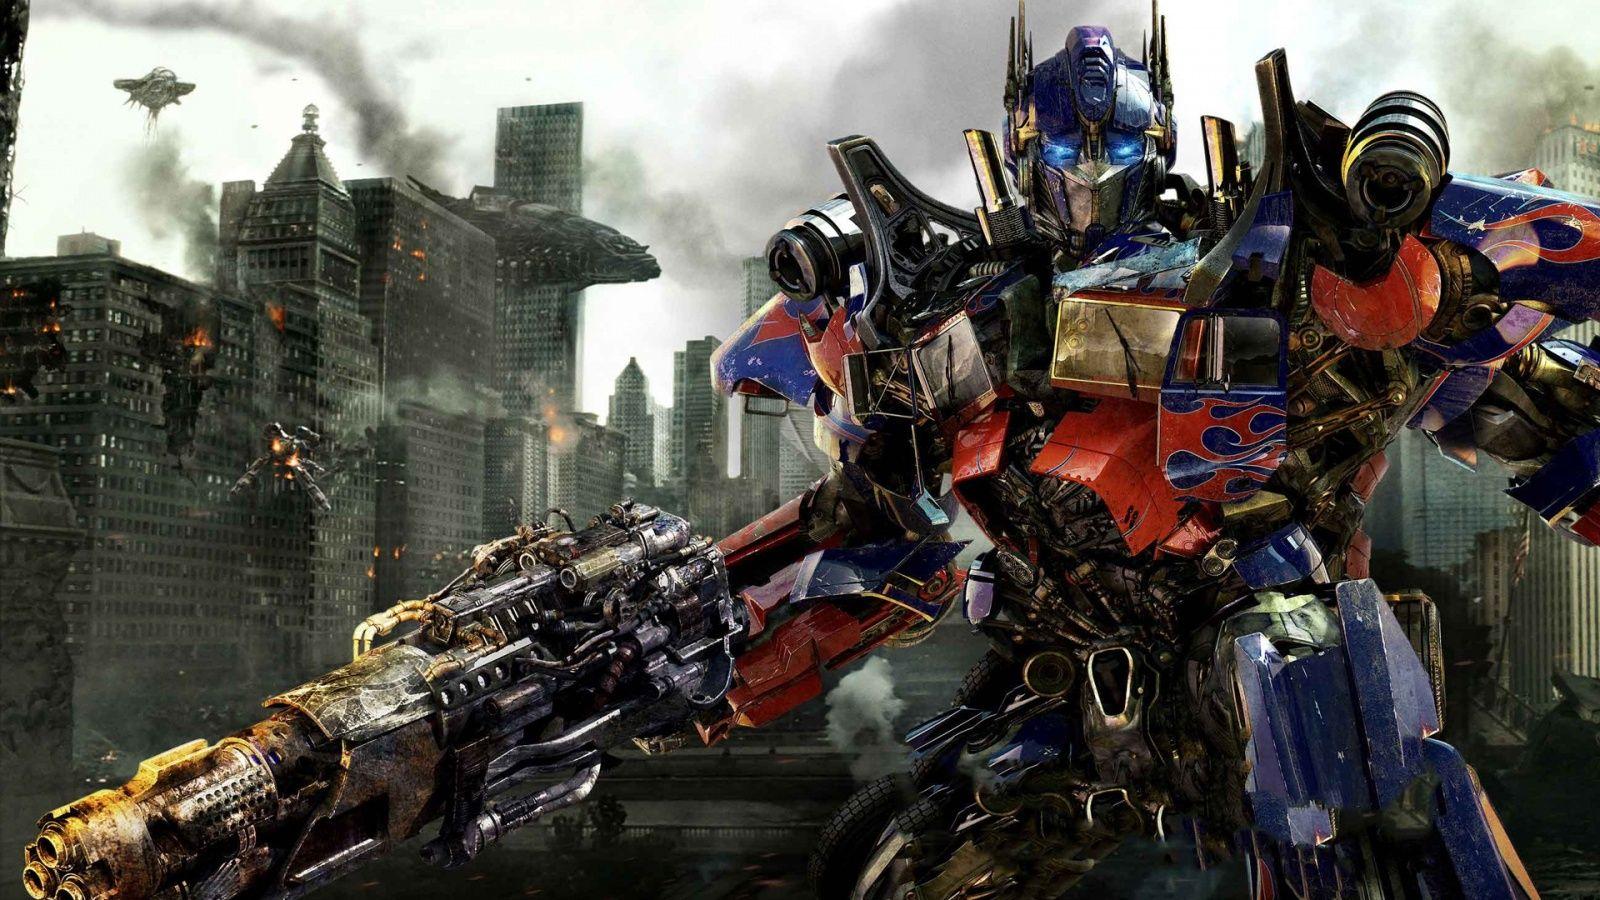 Transformers 3 Optimus Prime Wallpaper in jpg format for free download